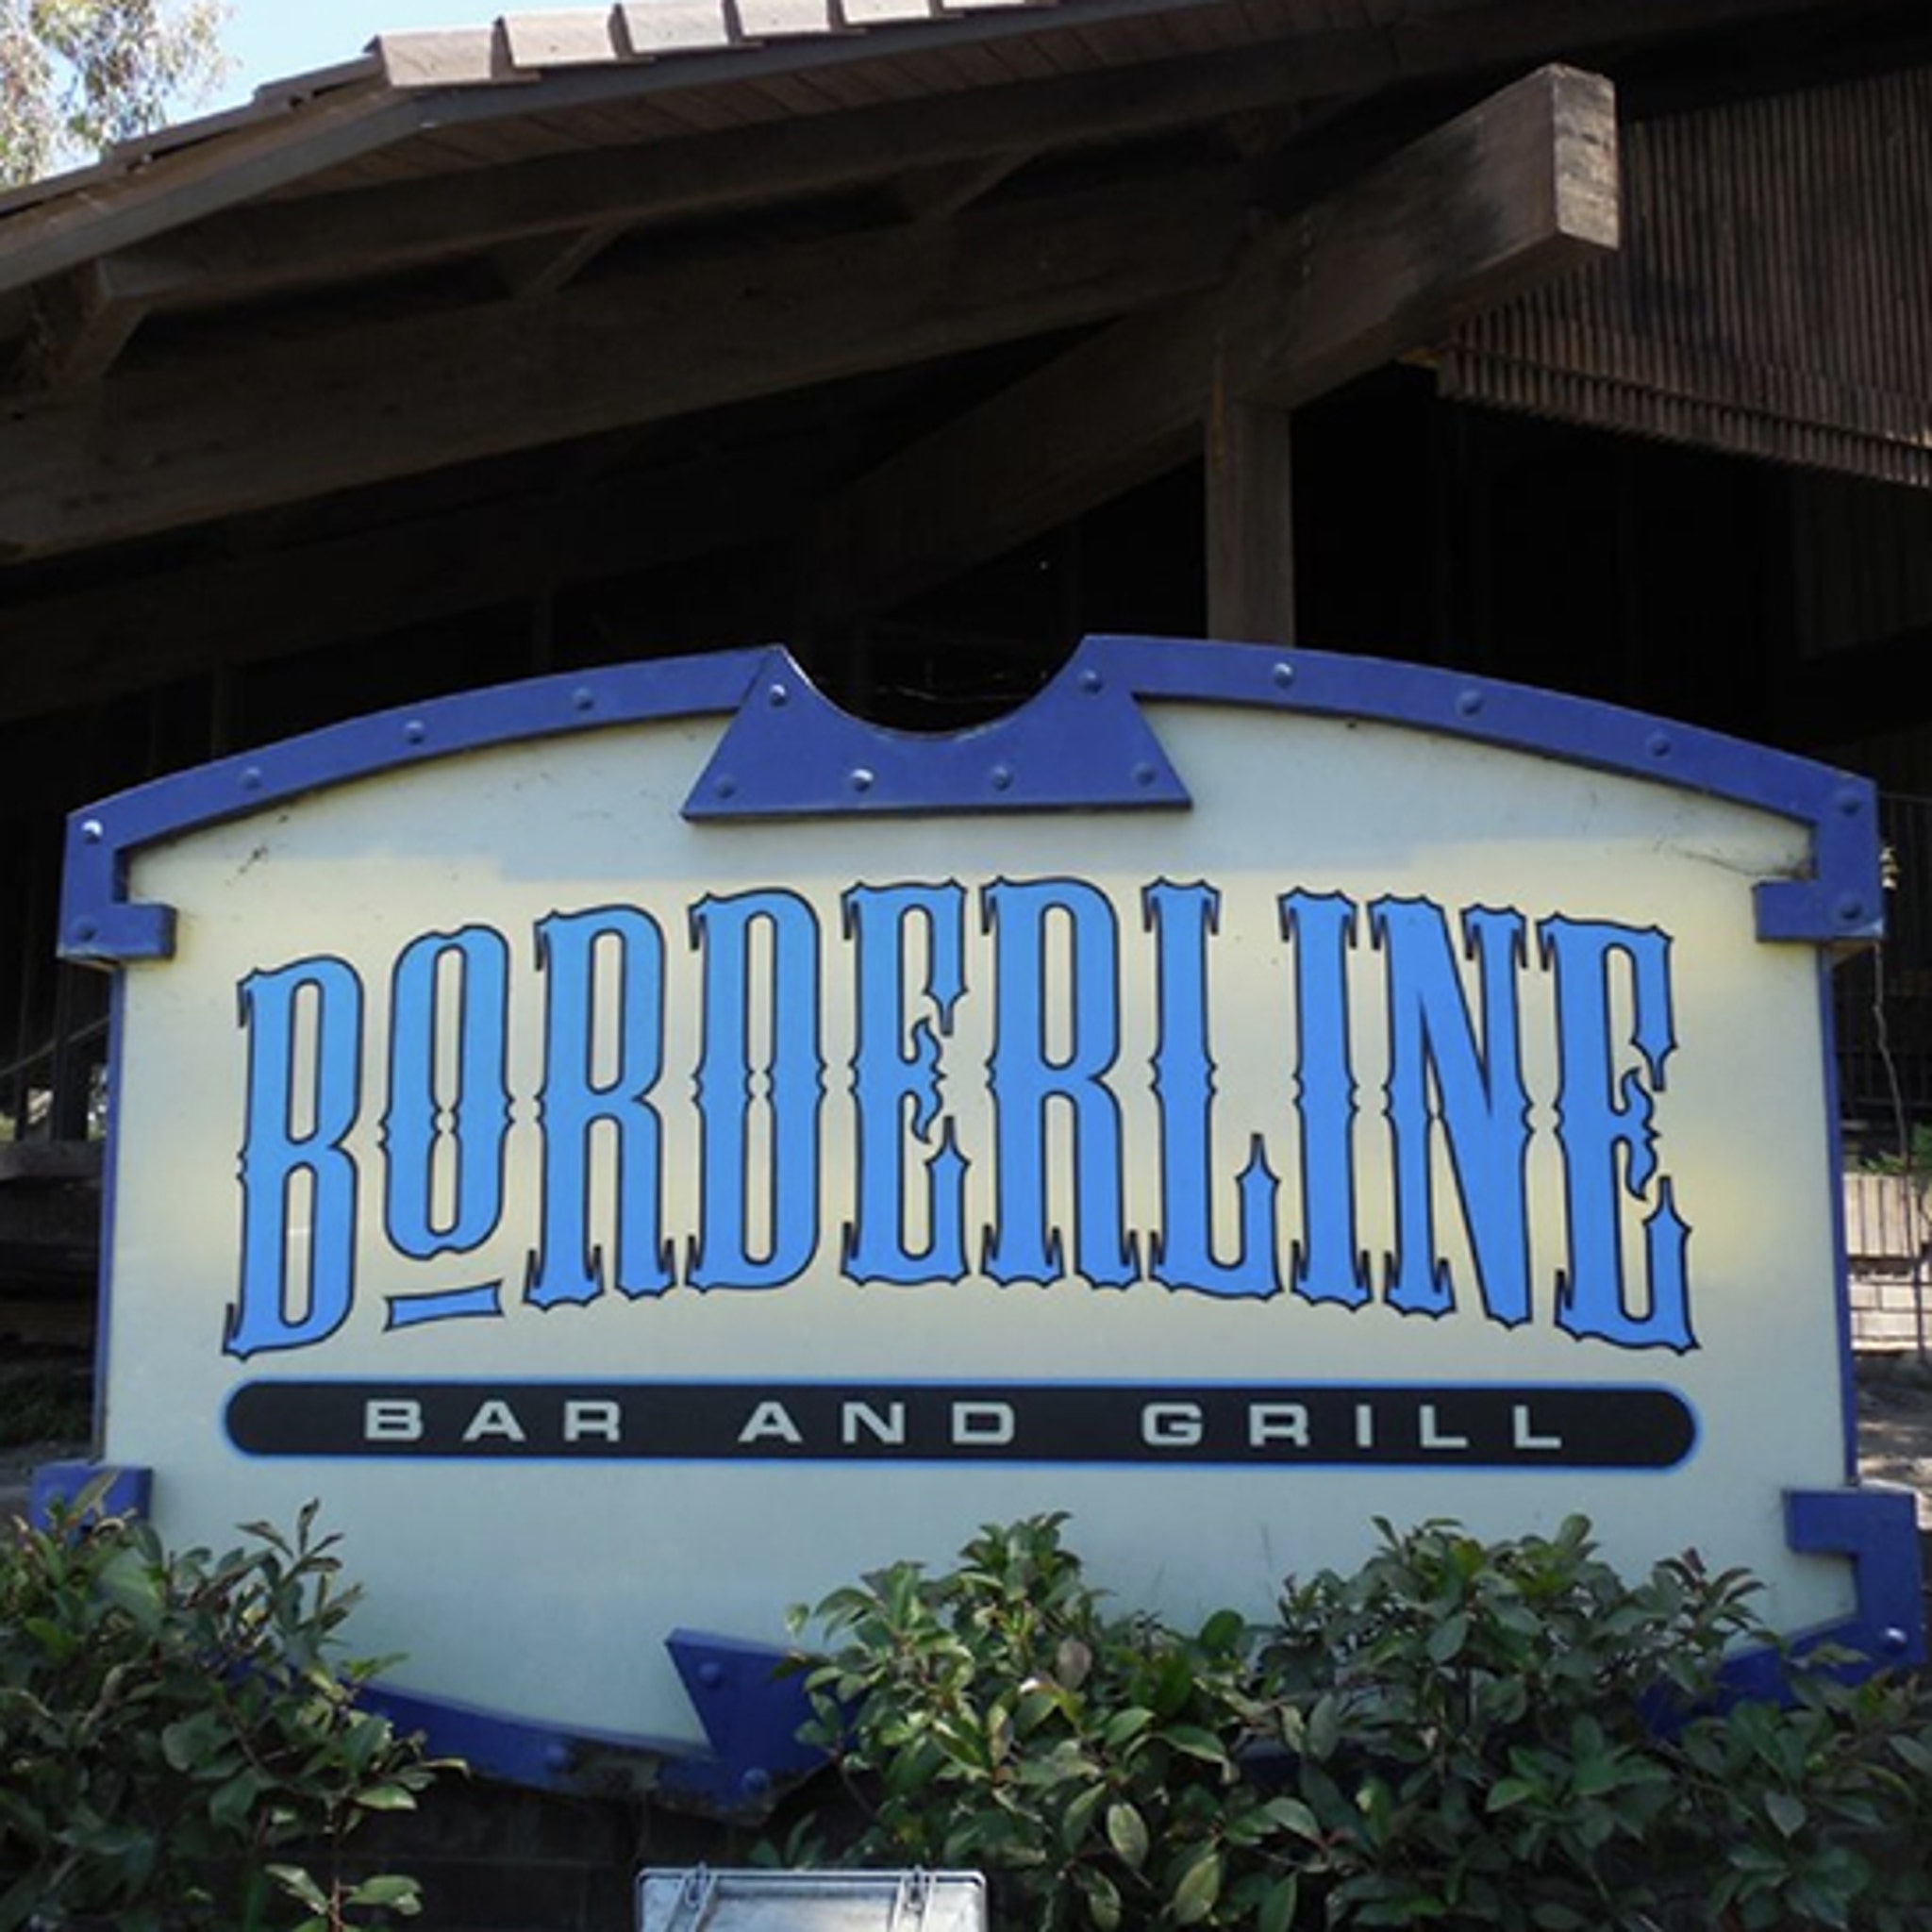 Scene of Thousand Oaks Shooting, Borderline Bar & Grill Will Reopen